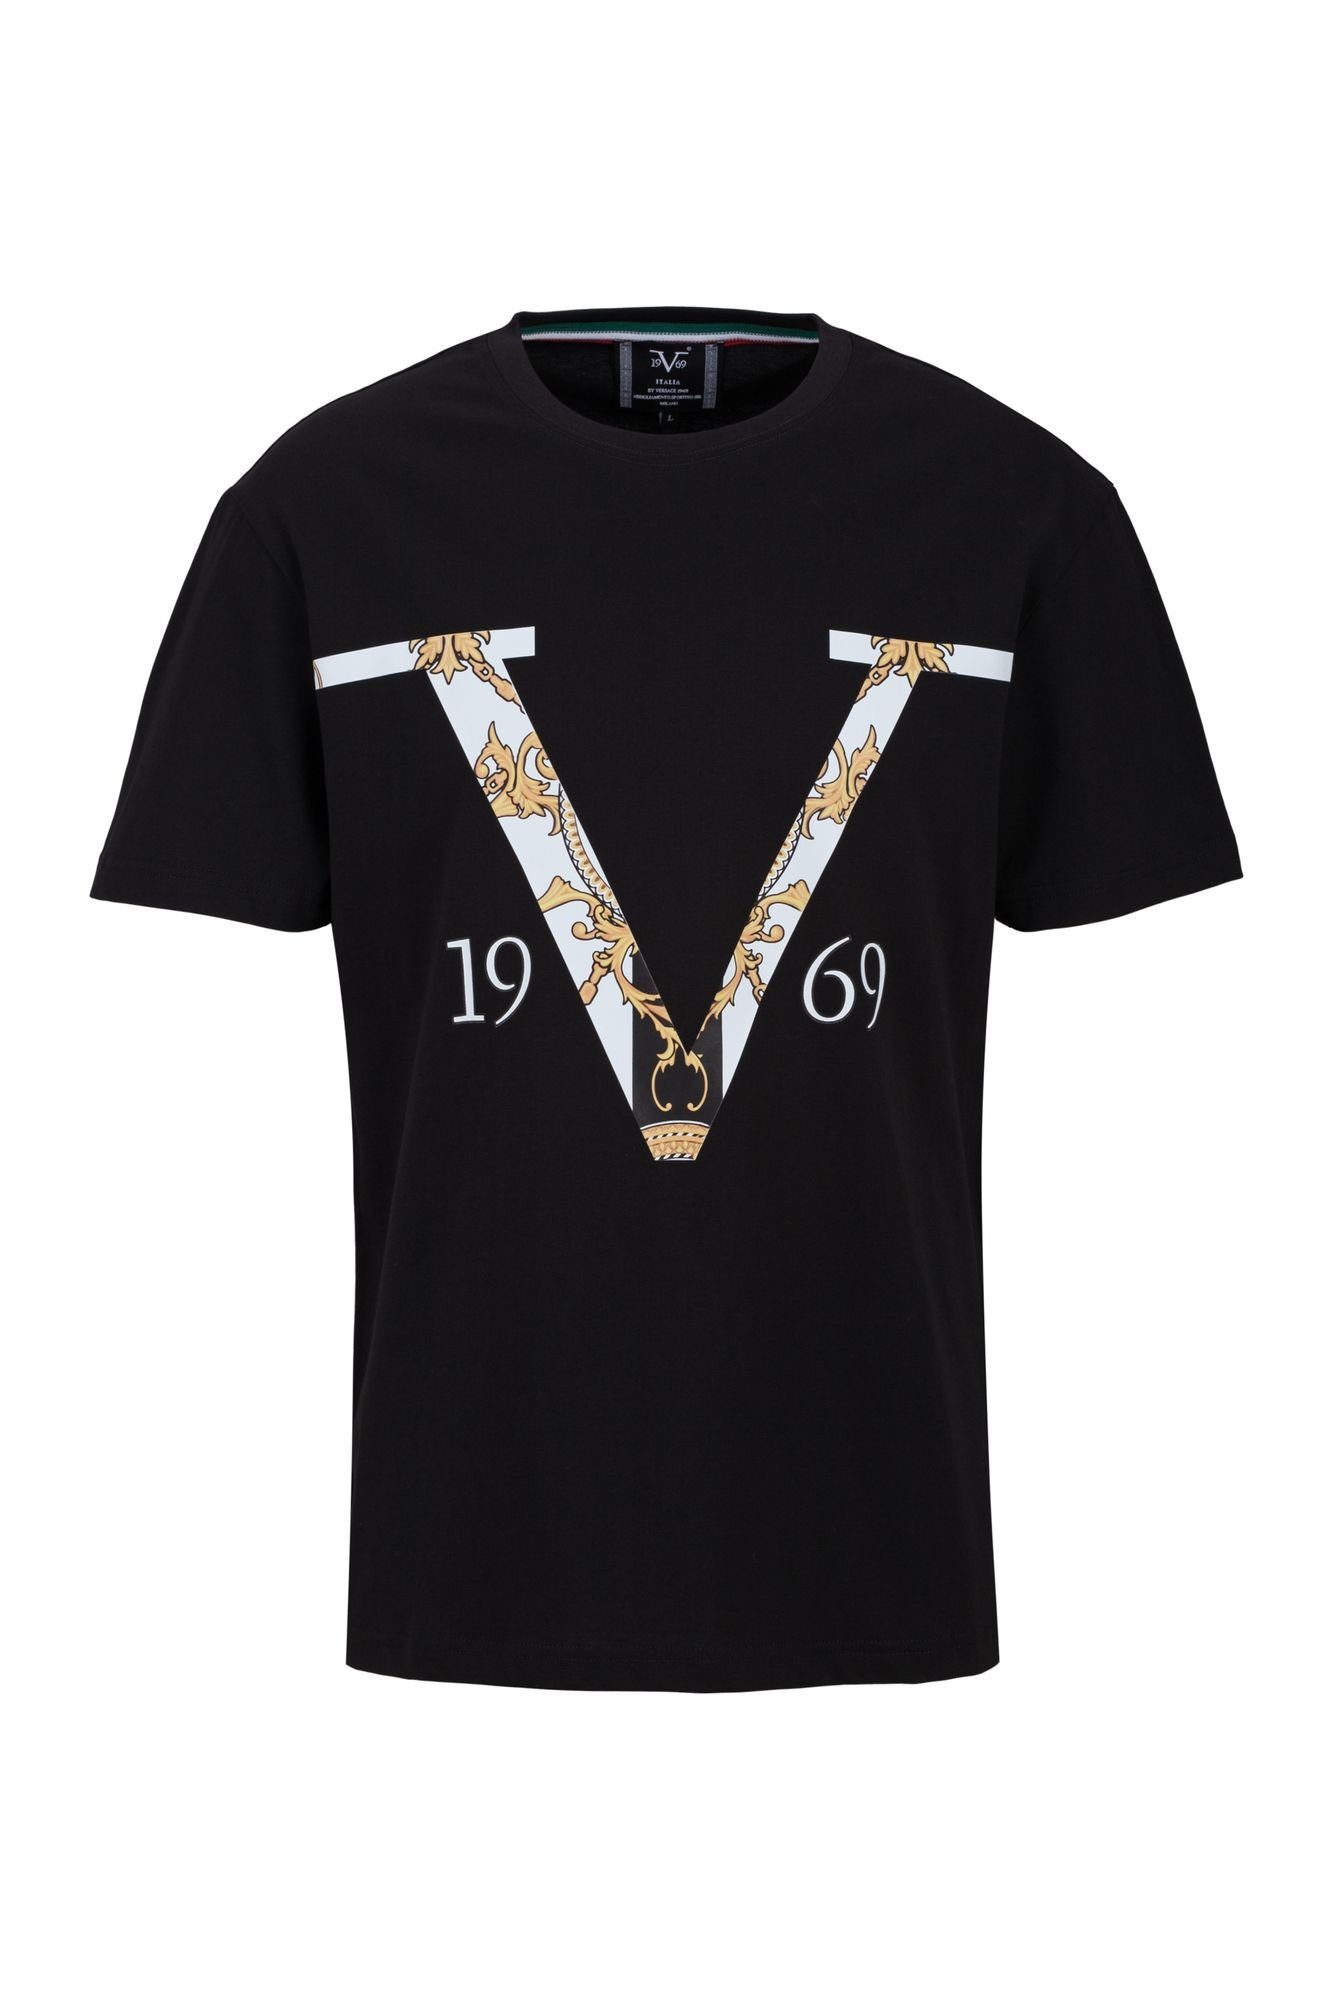 19V69 Italia by Versace Kiano Sportivo Versace by SRL T-Shirt 